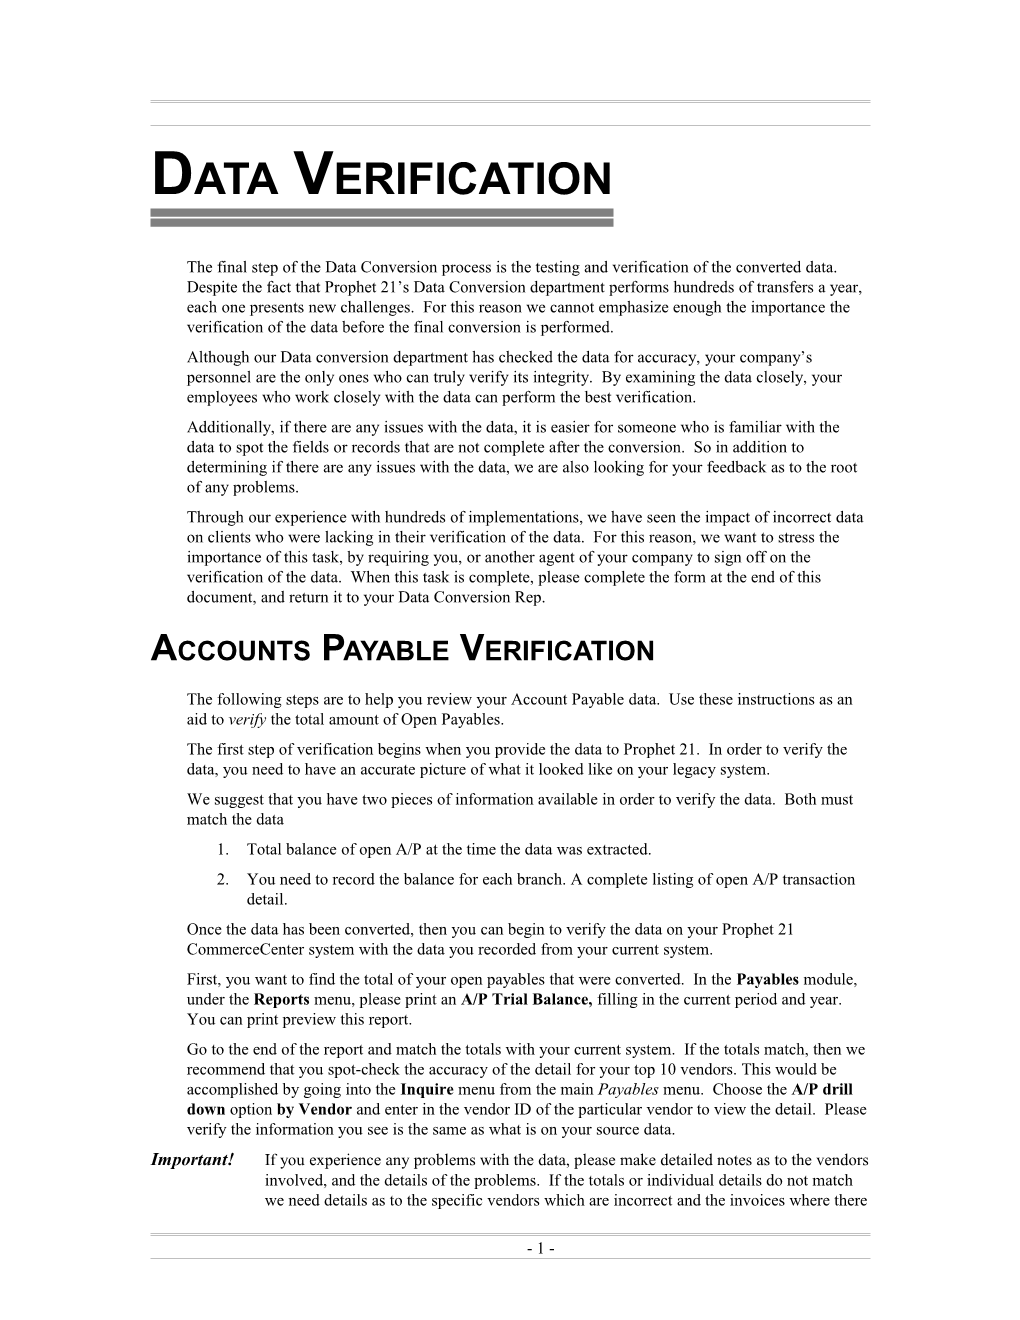 Data Verification